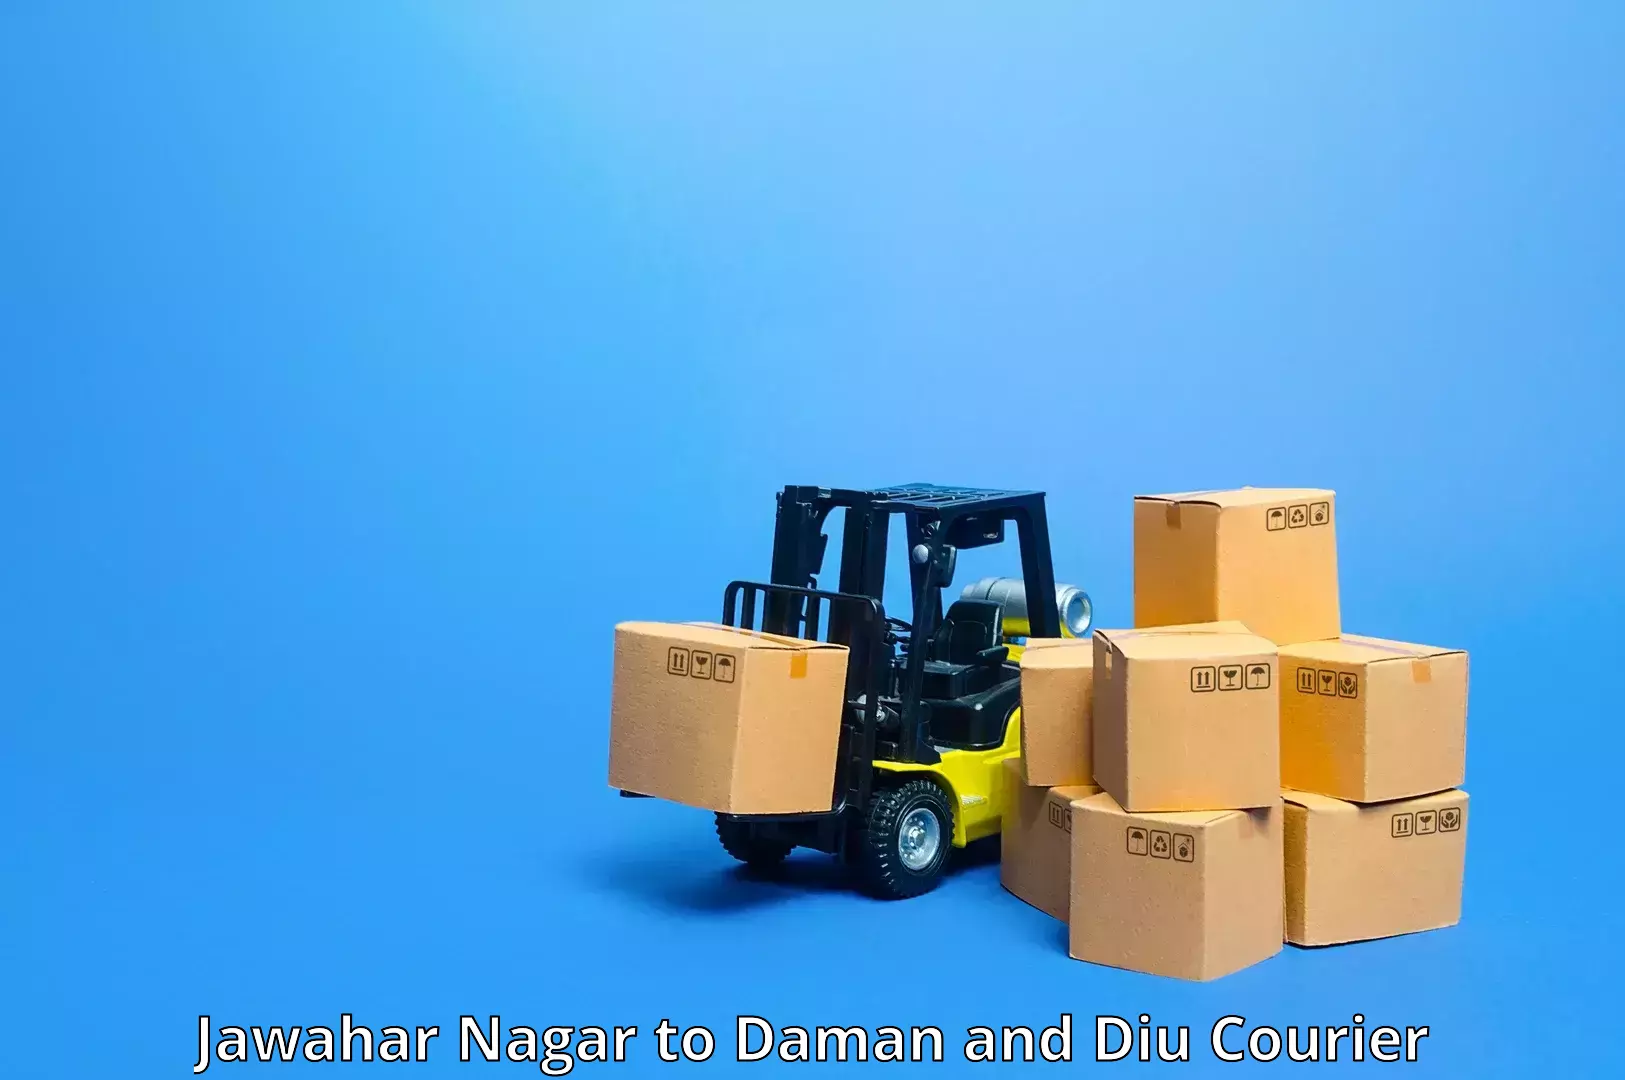 Global shipping networks Jawahar Nagar to Daman